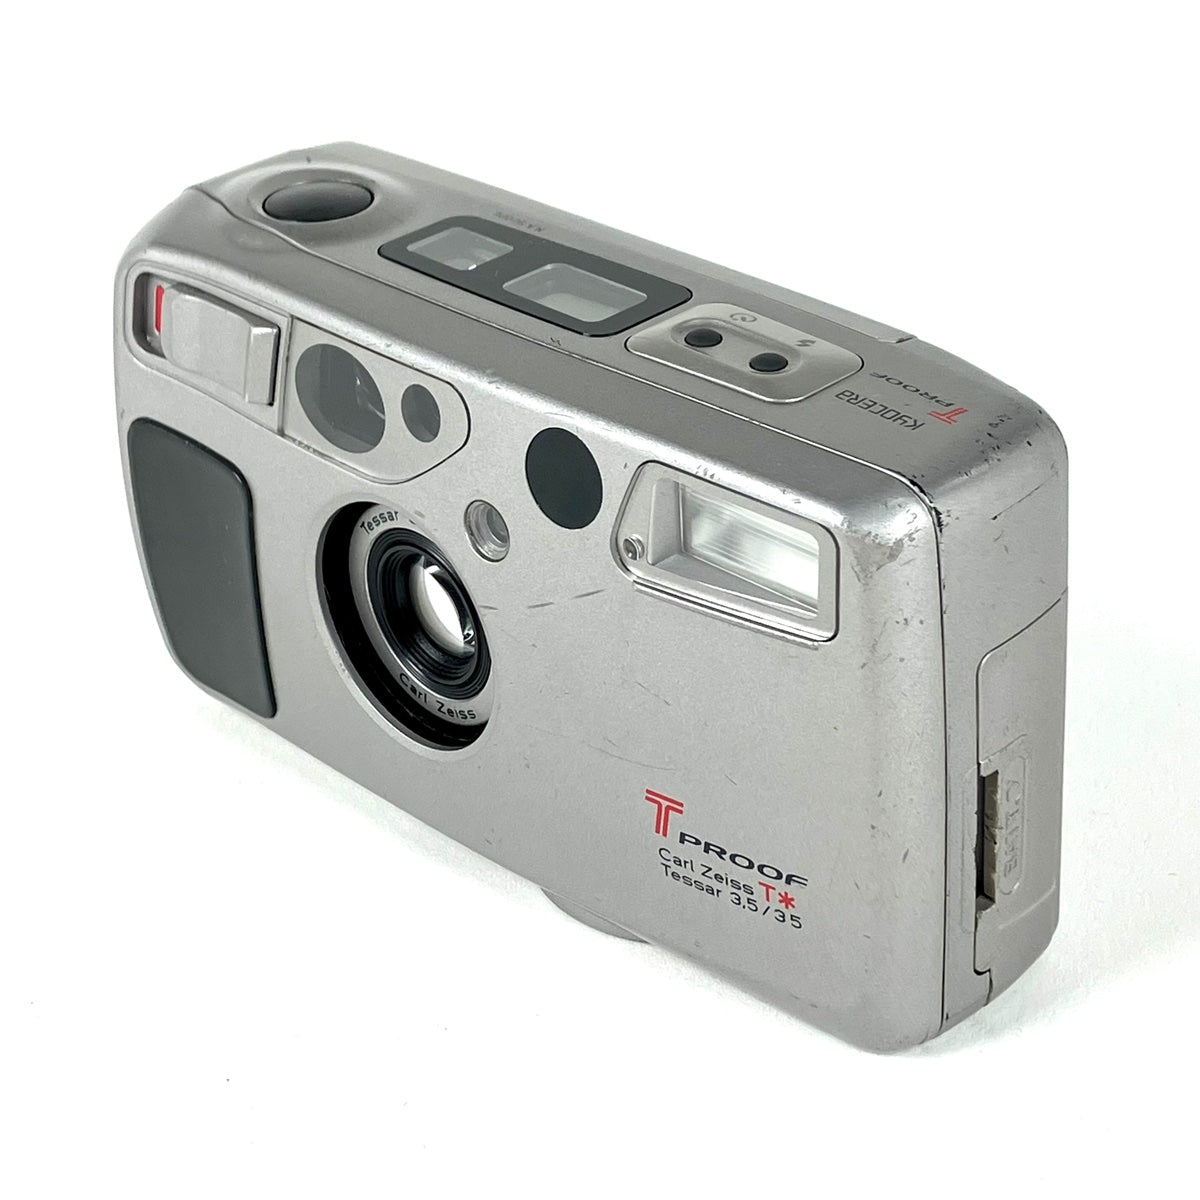 KYOCERA 京セラ TPROOF Carl Zeiss Tessar 35mm F3.5 コンパクト